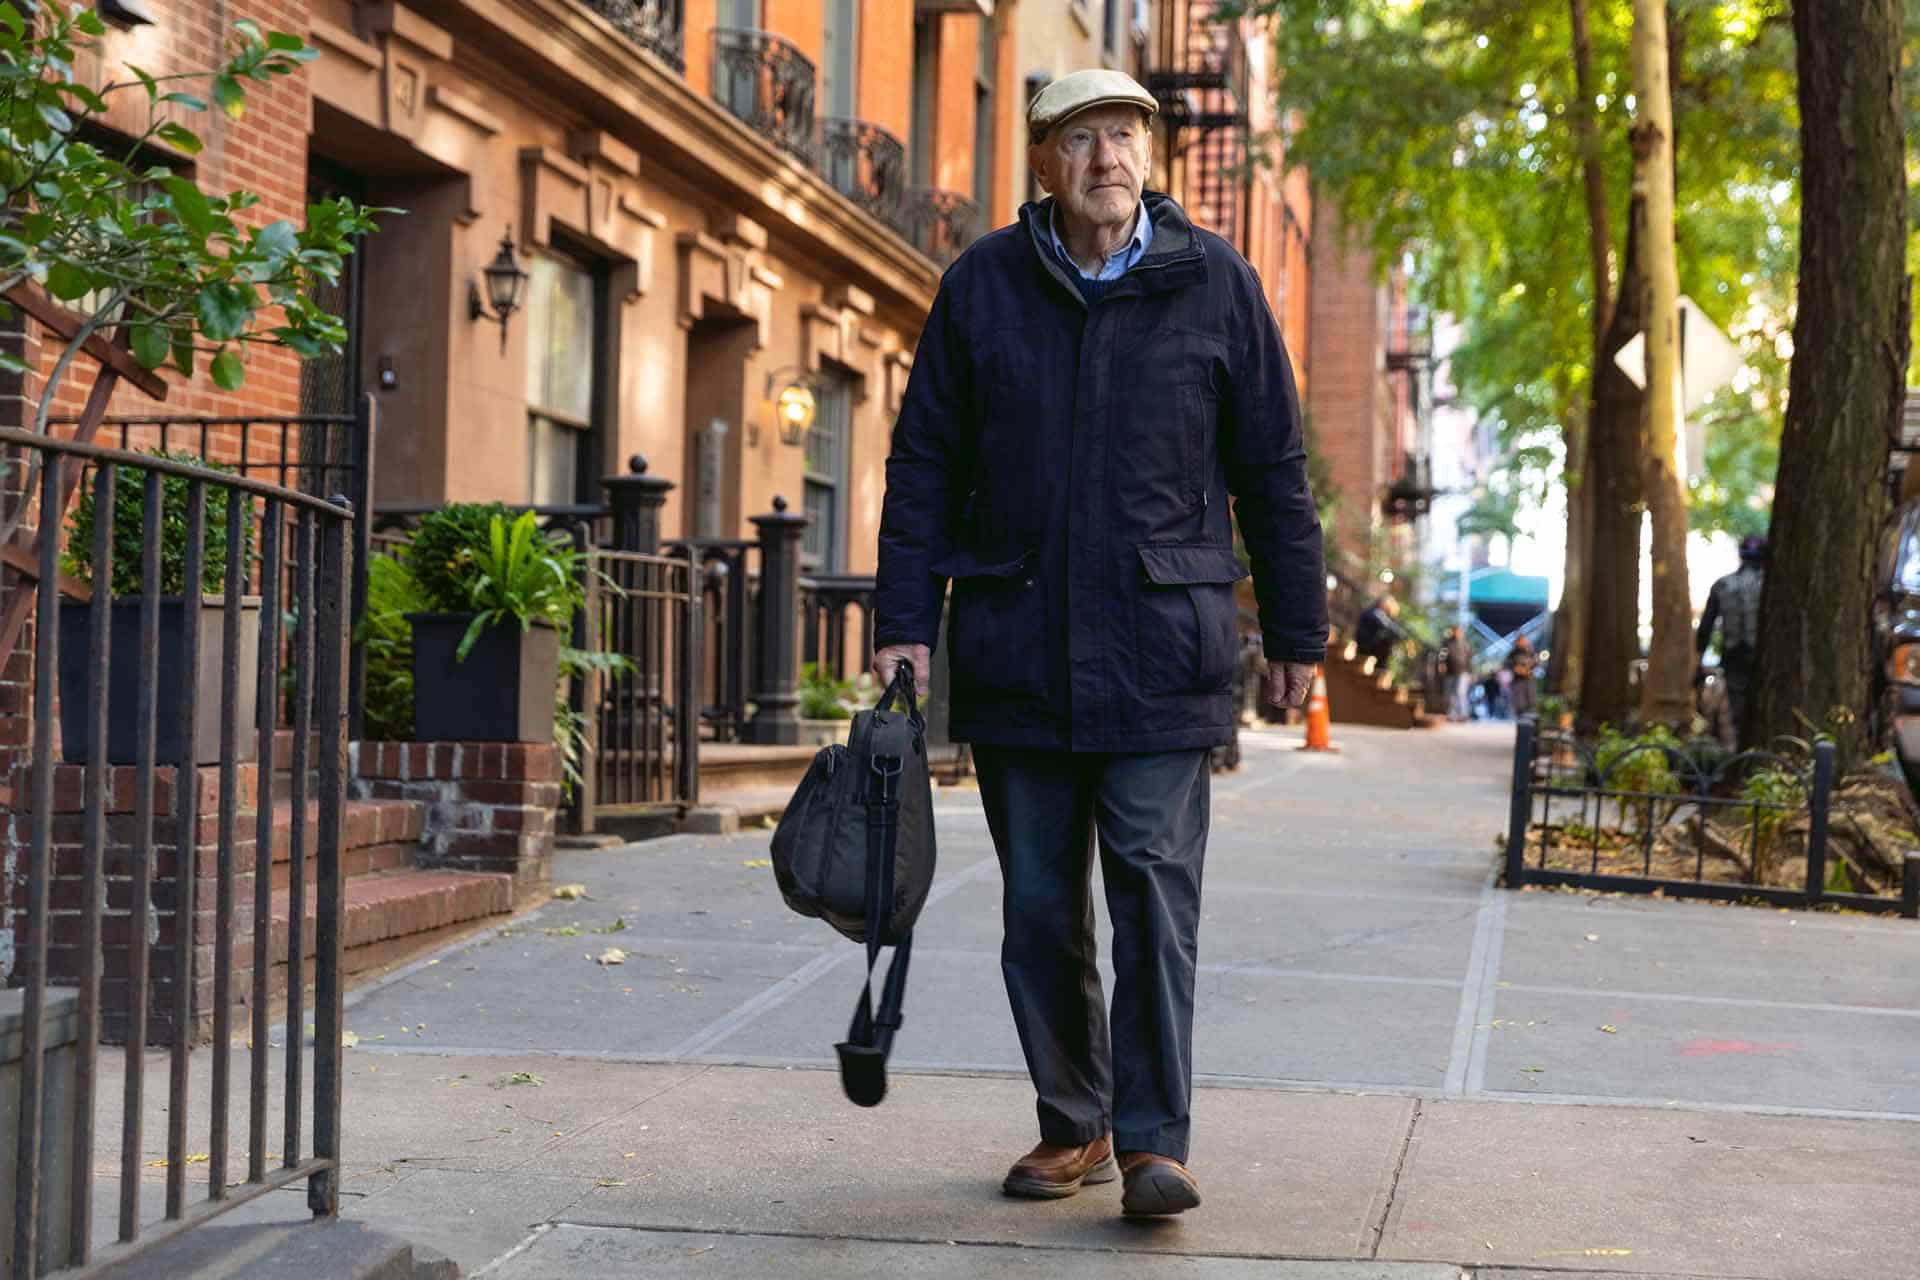 image of elderly man walking on sidewalk